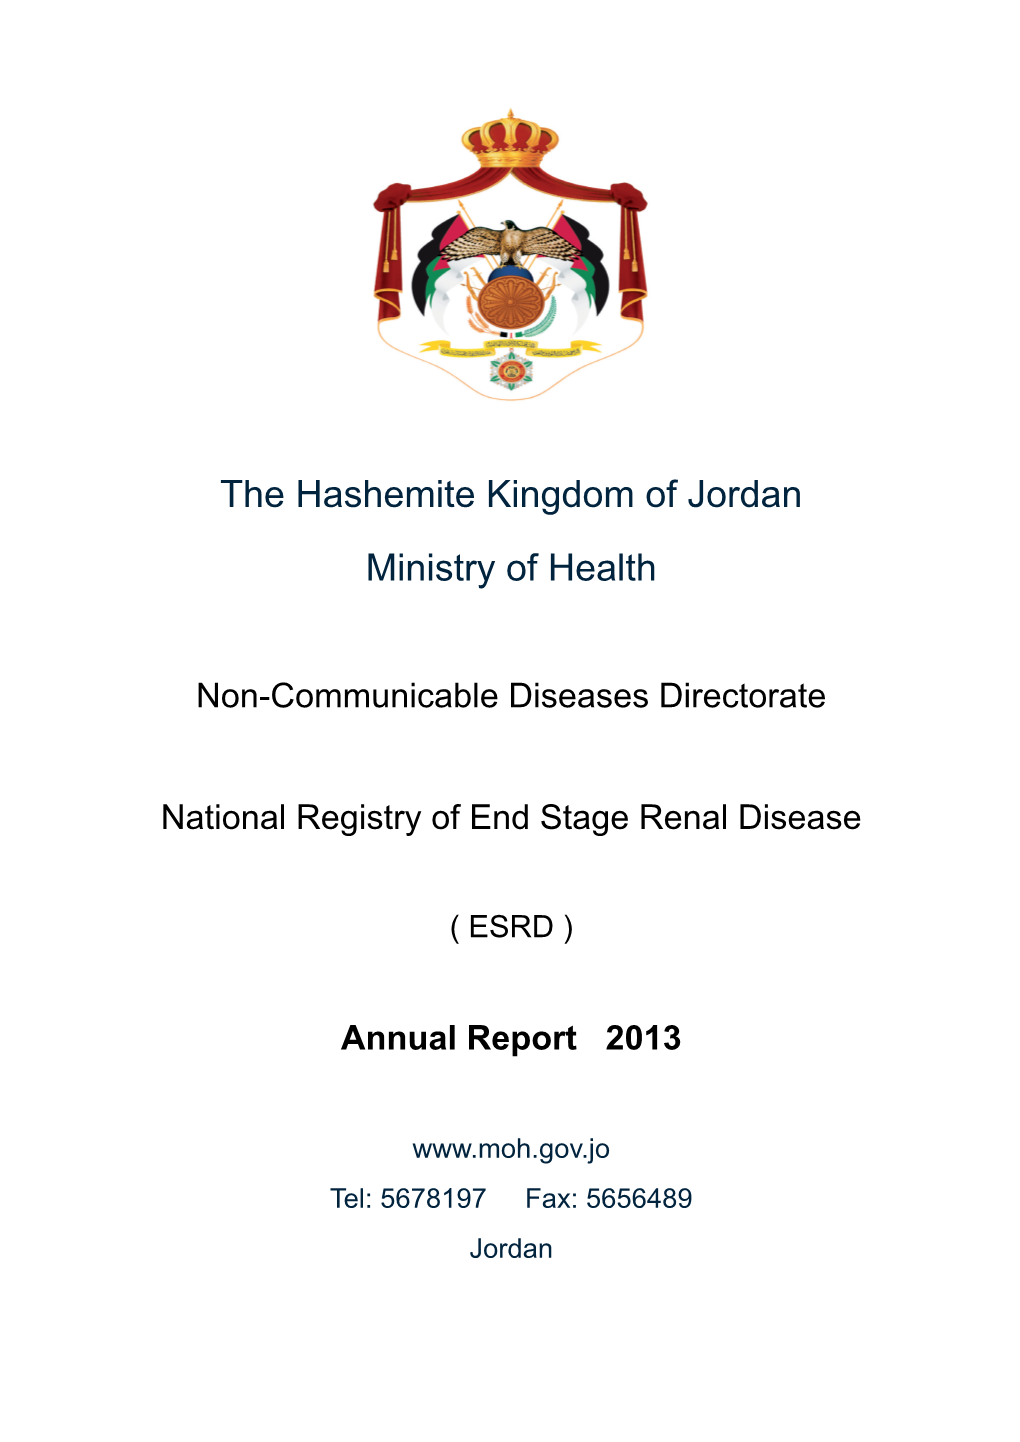 The Hashemite Kingdom of Jordan Ministry of Health